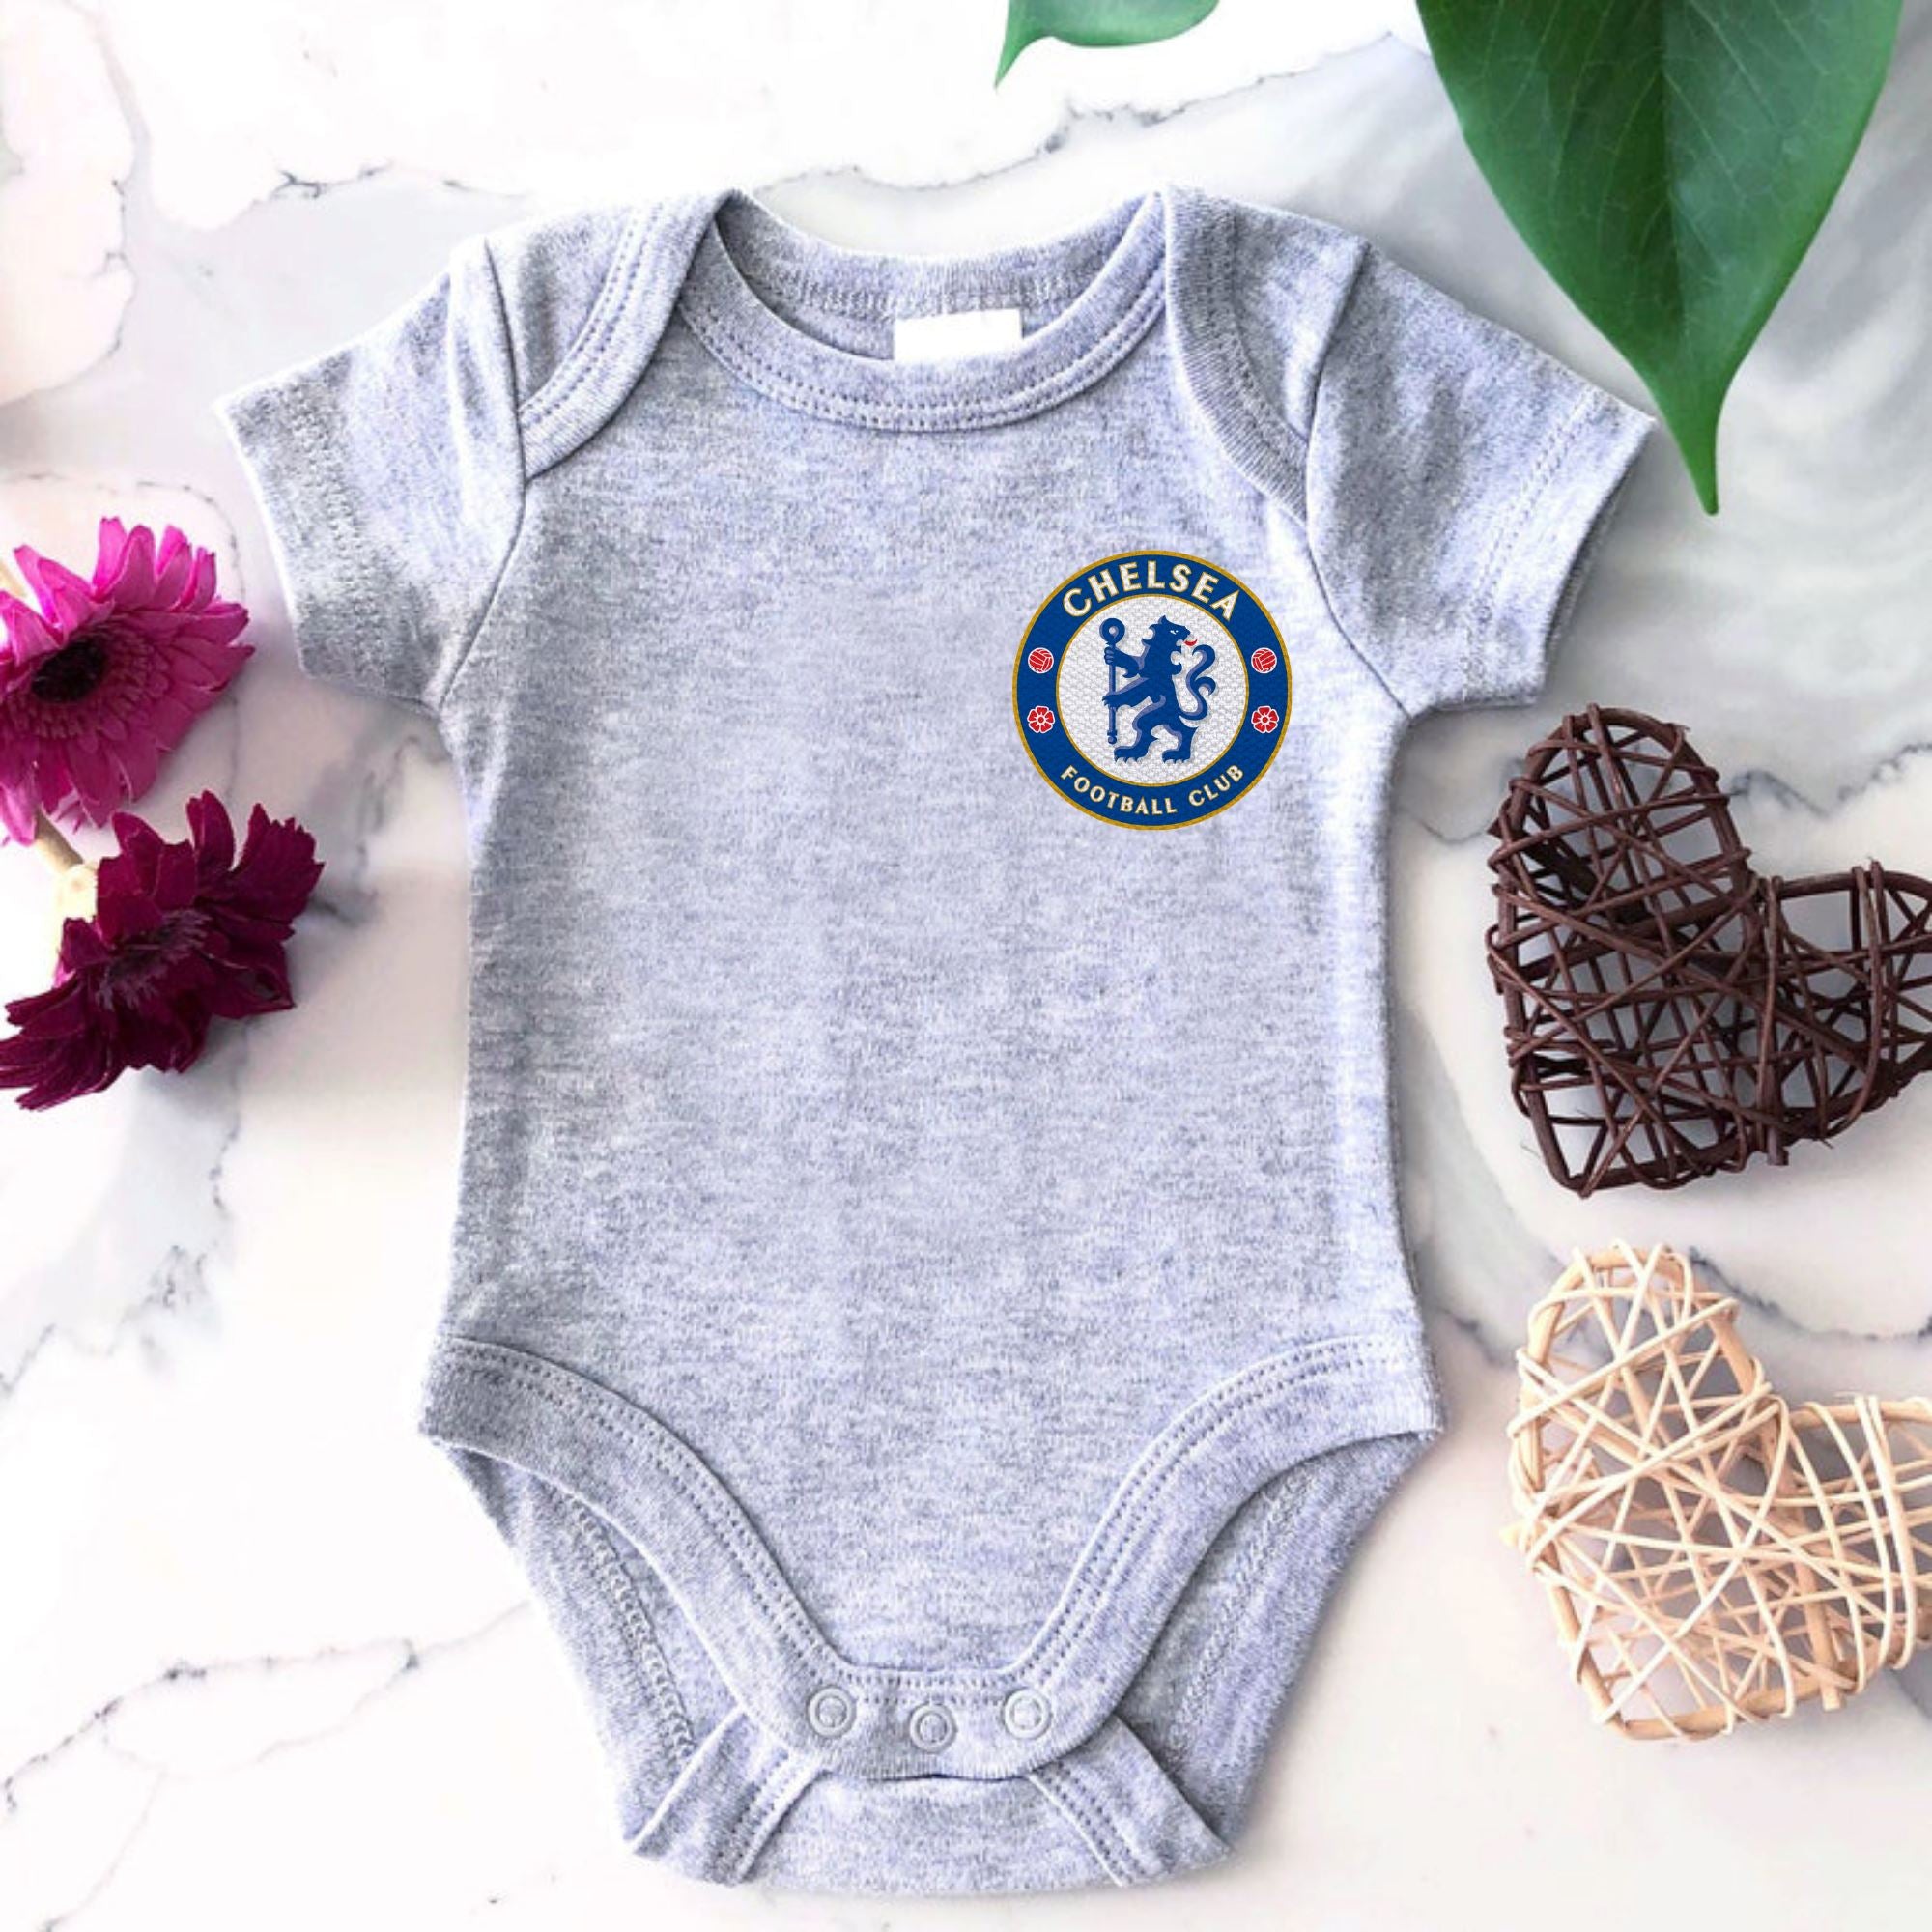 Chelsea FC Baby Bodysuit - ITASPORT